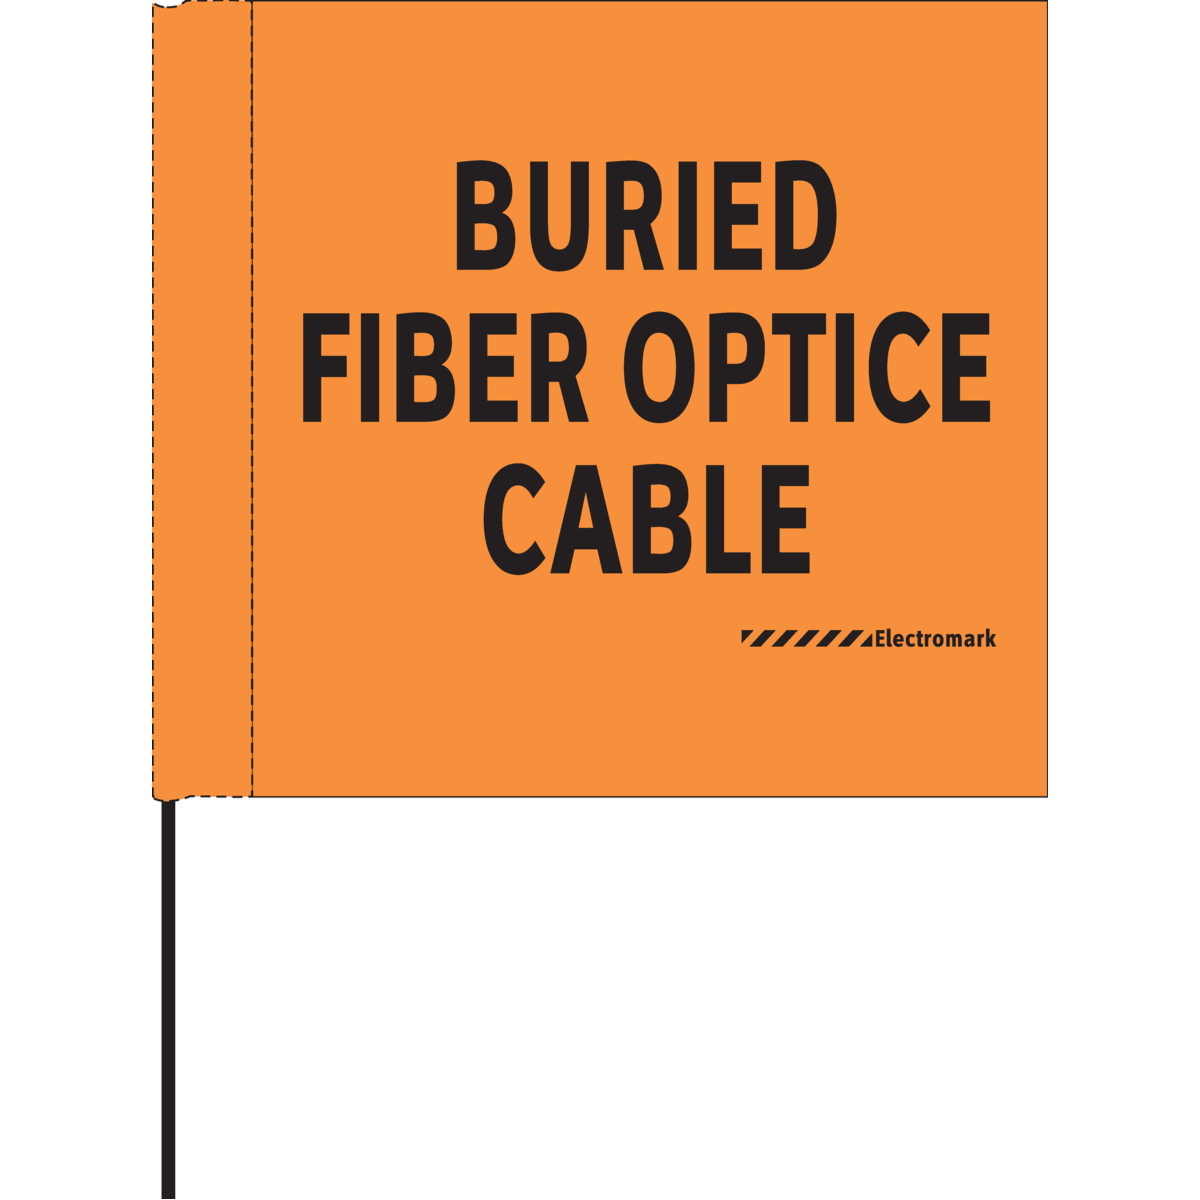 Buried Fiber Optic Cable Flag